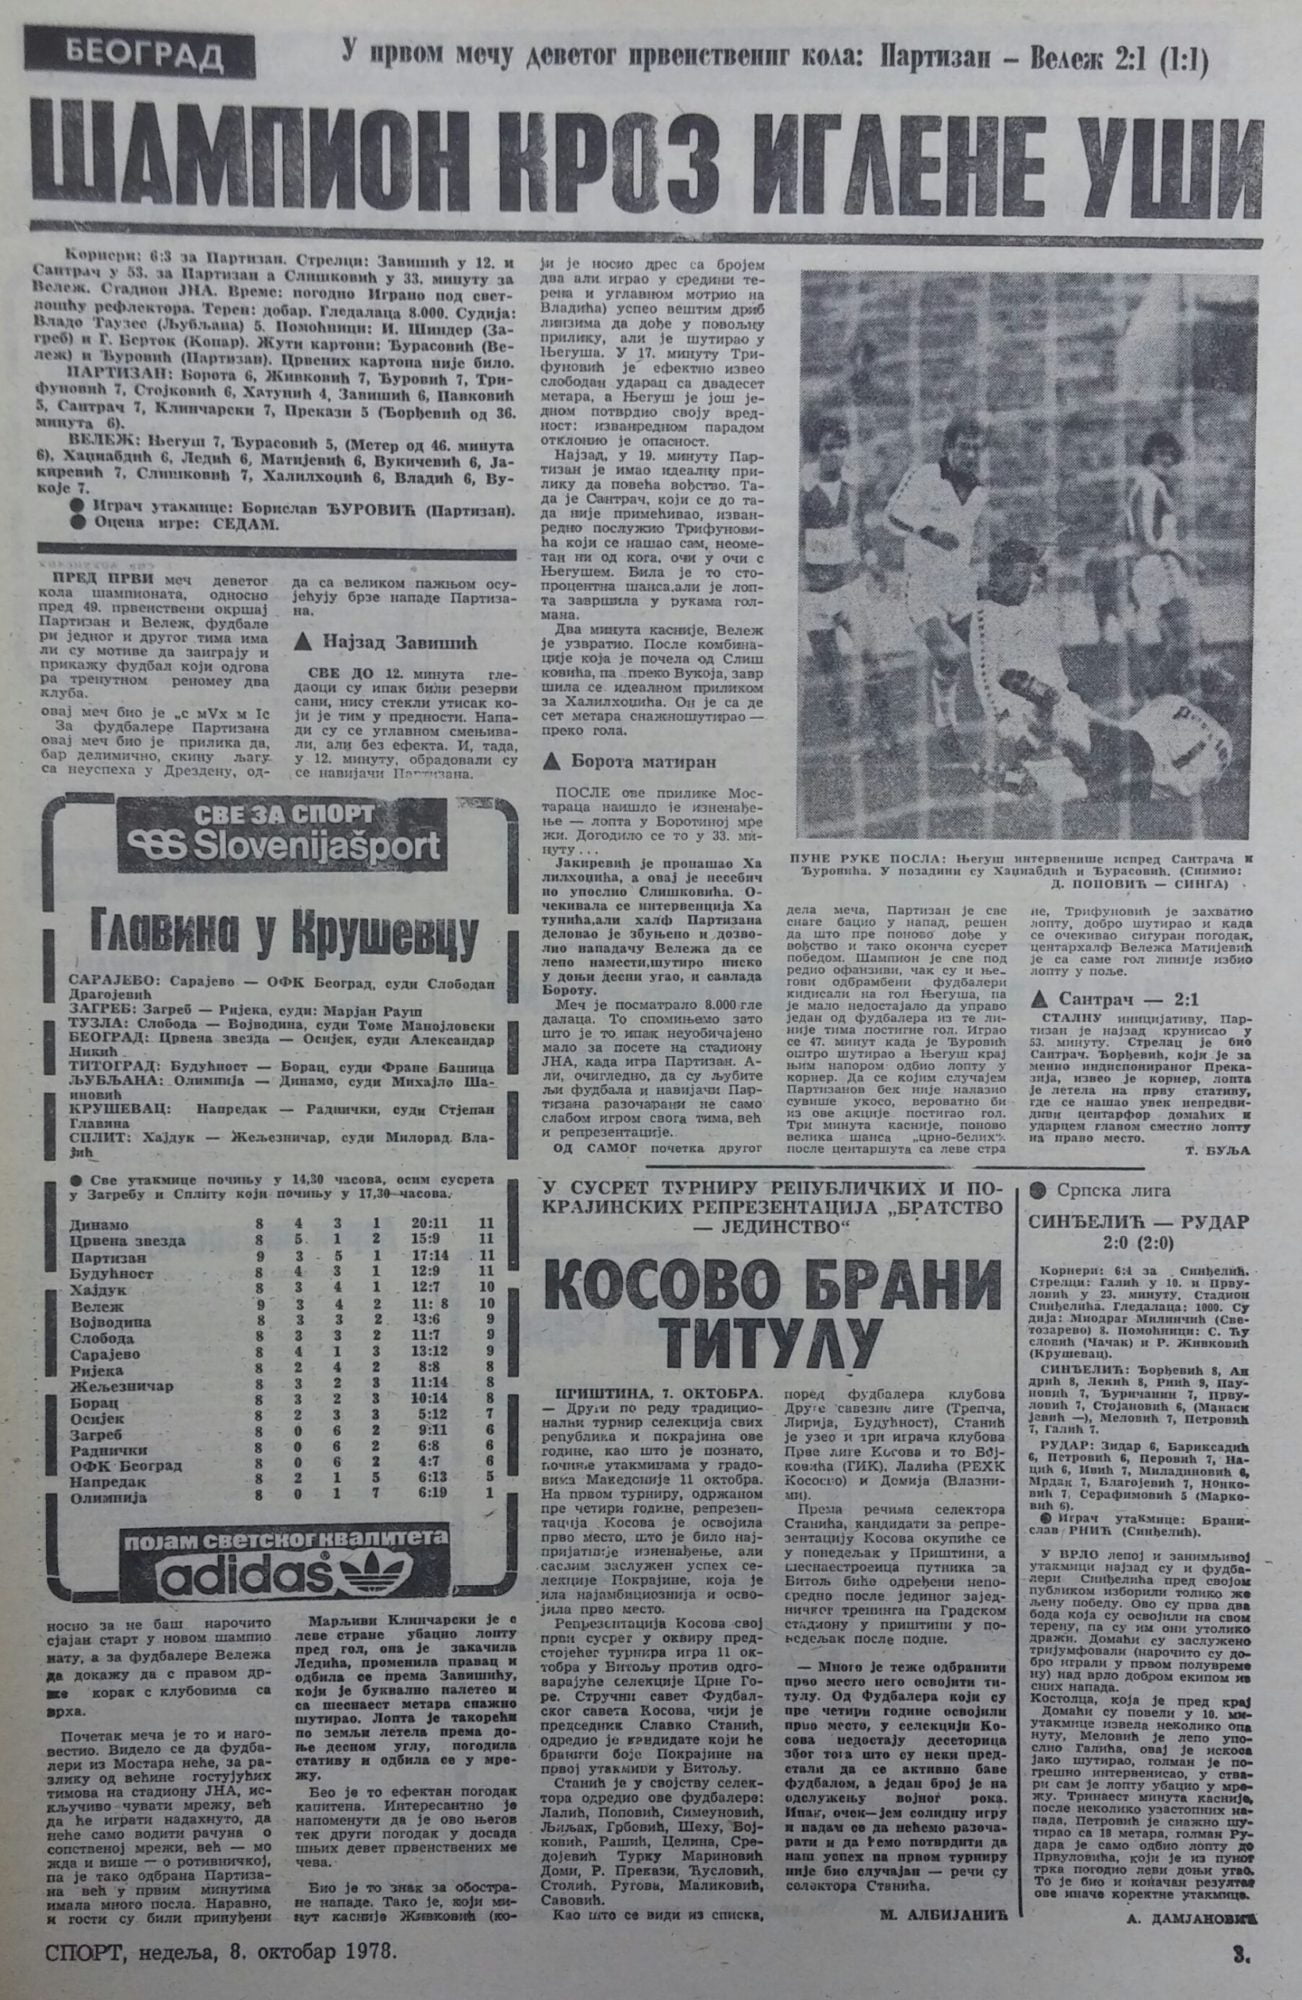 Vojvodina - Partizan 79:80, X kolo YUBA liga, 28.12.1991. 